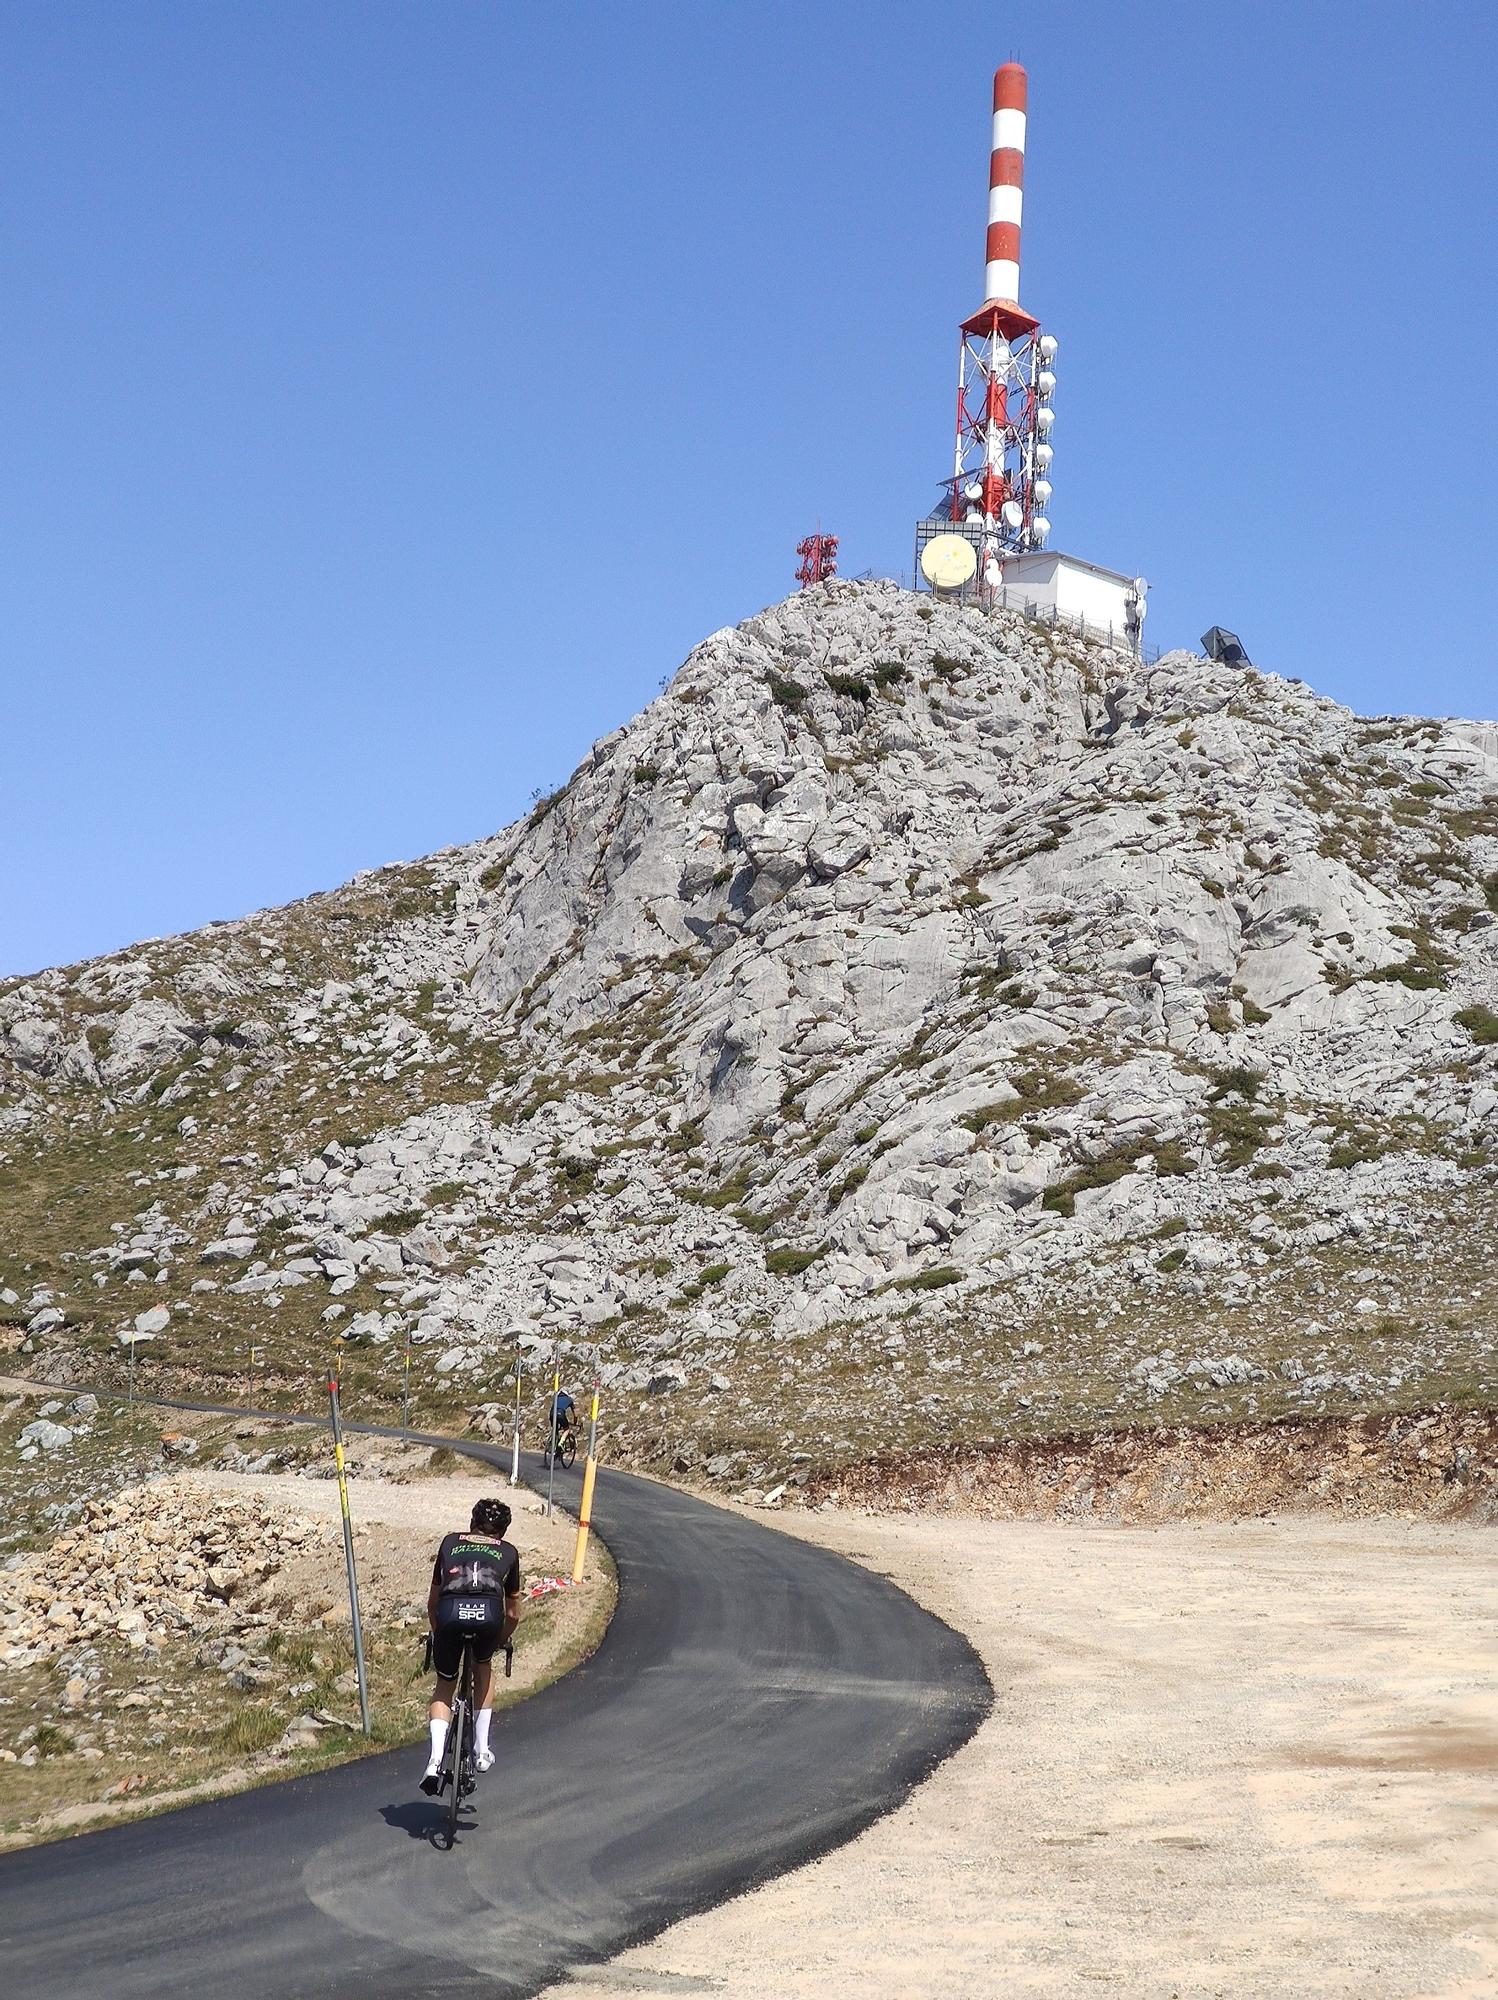 La subida al Gamoniteiru, otra cima épica para el ciclismo español